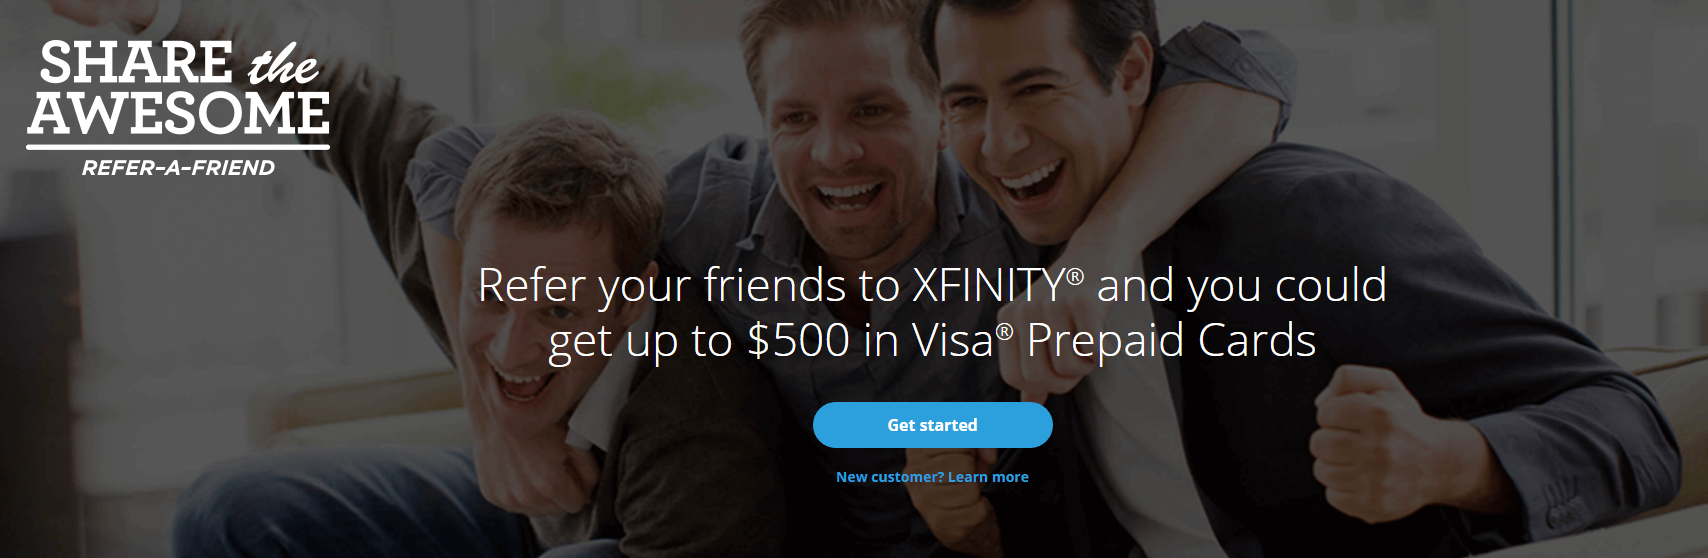 xfinity referral program example